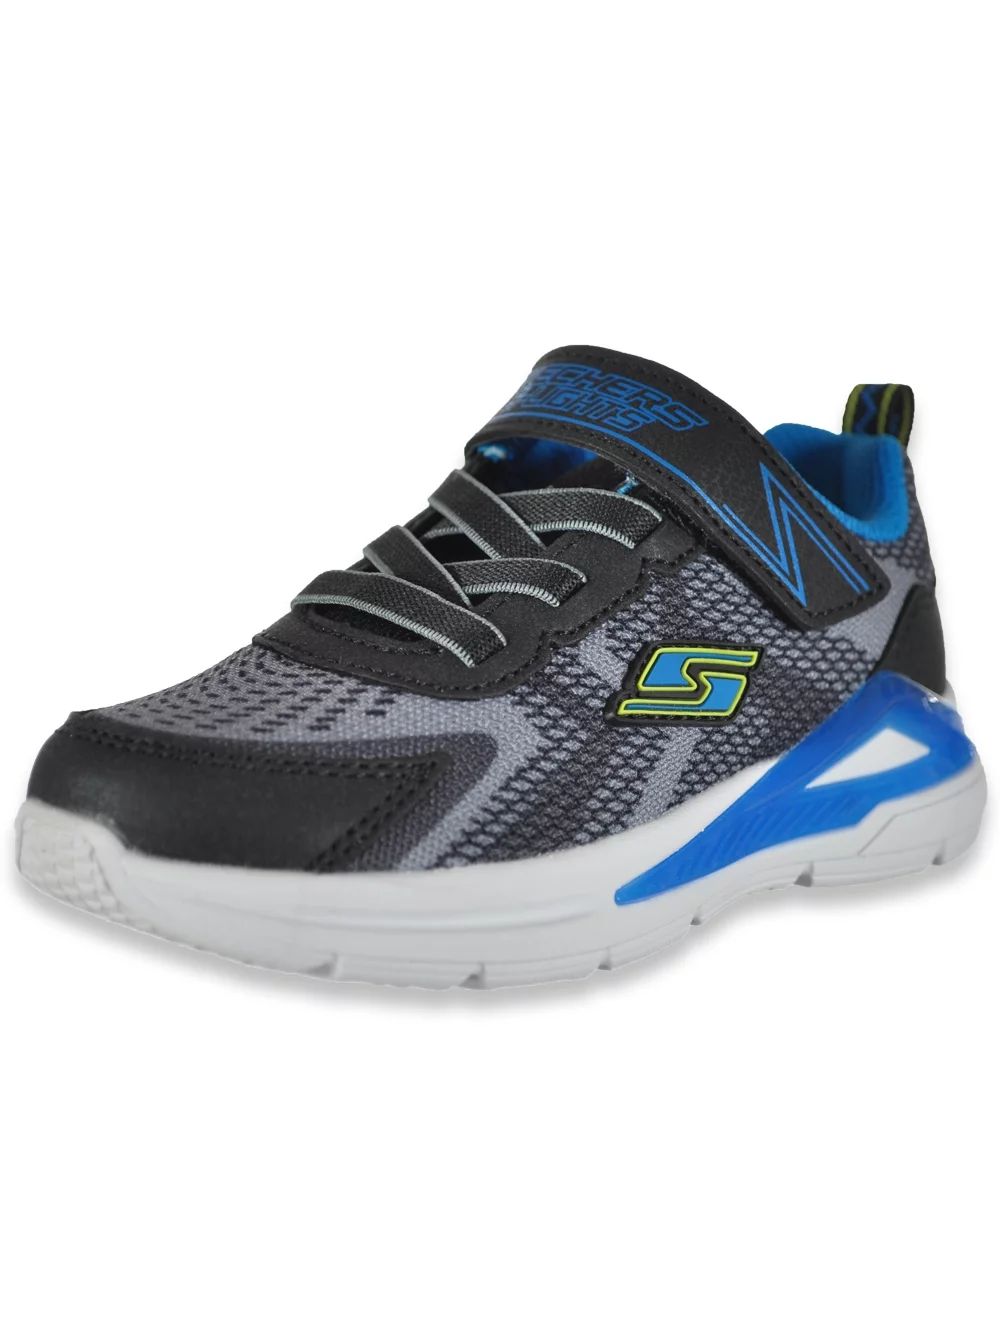 Skechers Boys' Tri Light-Up Sneakers - Black/Blue, 9 Toddler | Walmart (US)